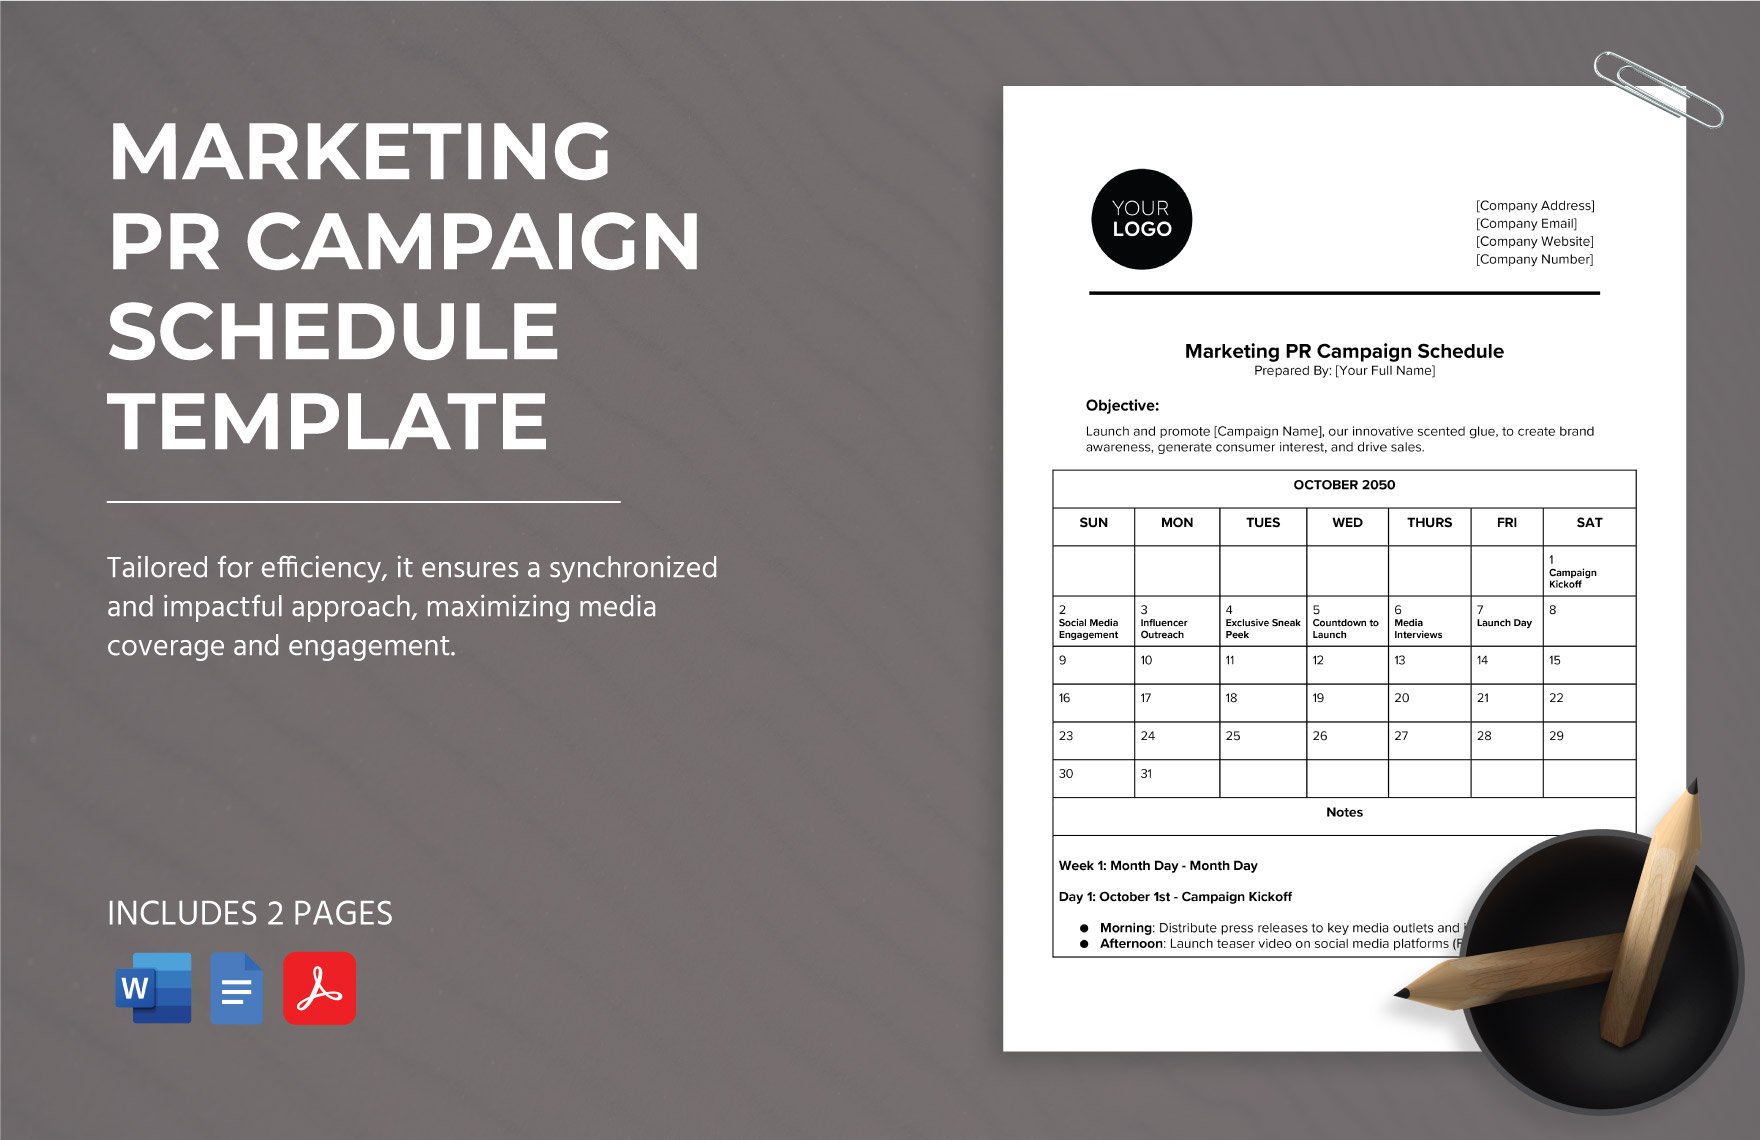 Marketing PR Campaign Schedule Template in Word, Google Docs, PDF